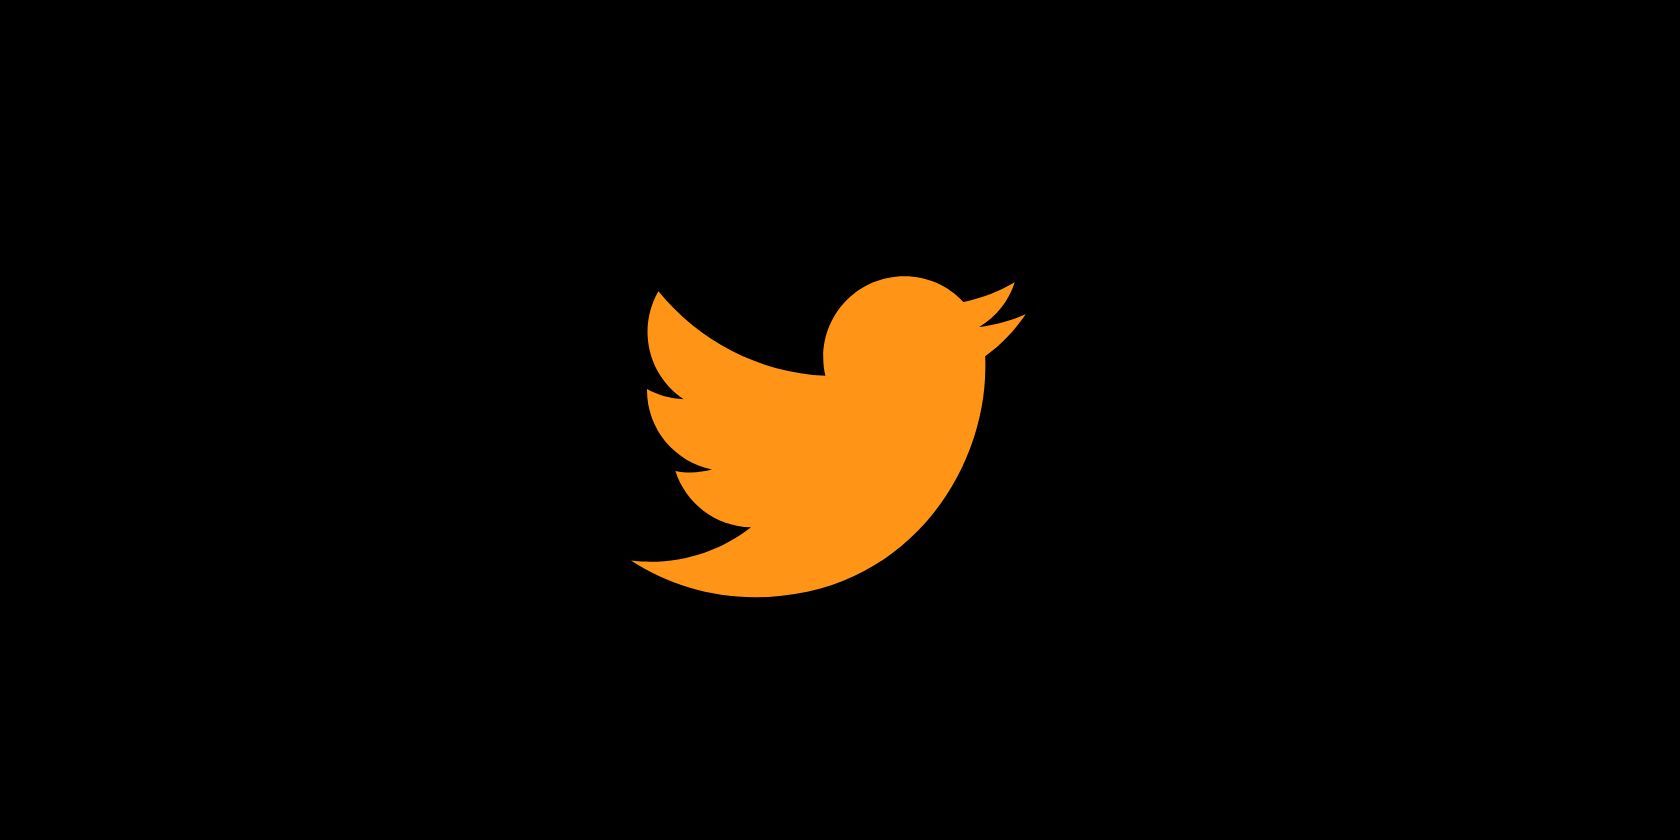 twitter logo black and yellow